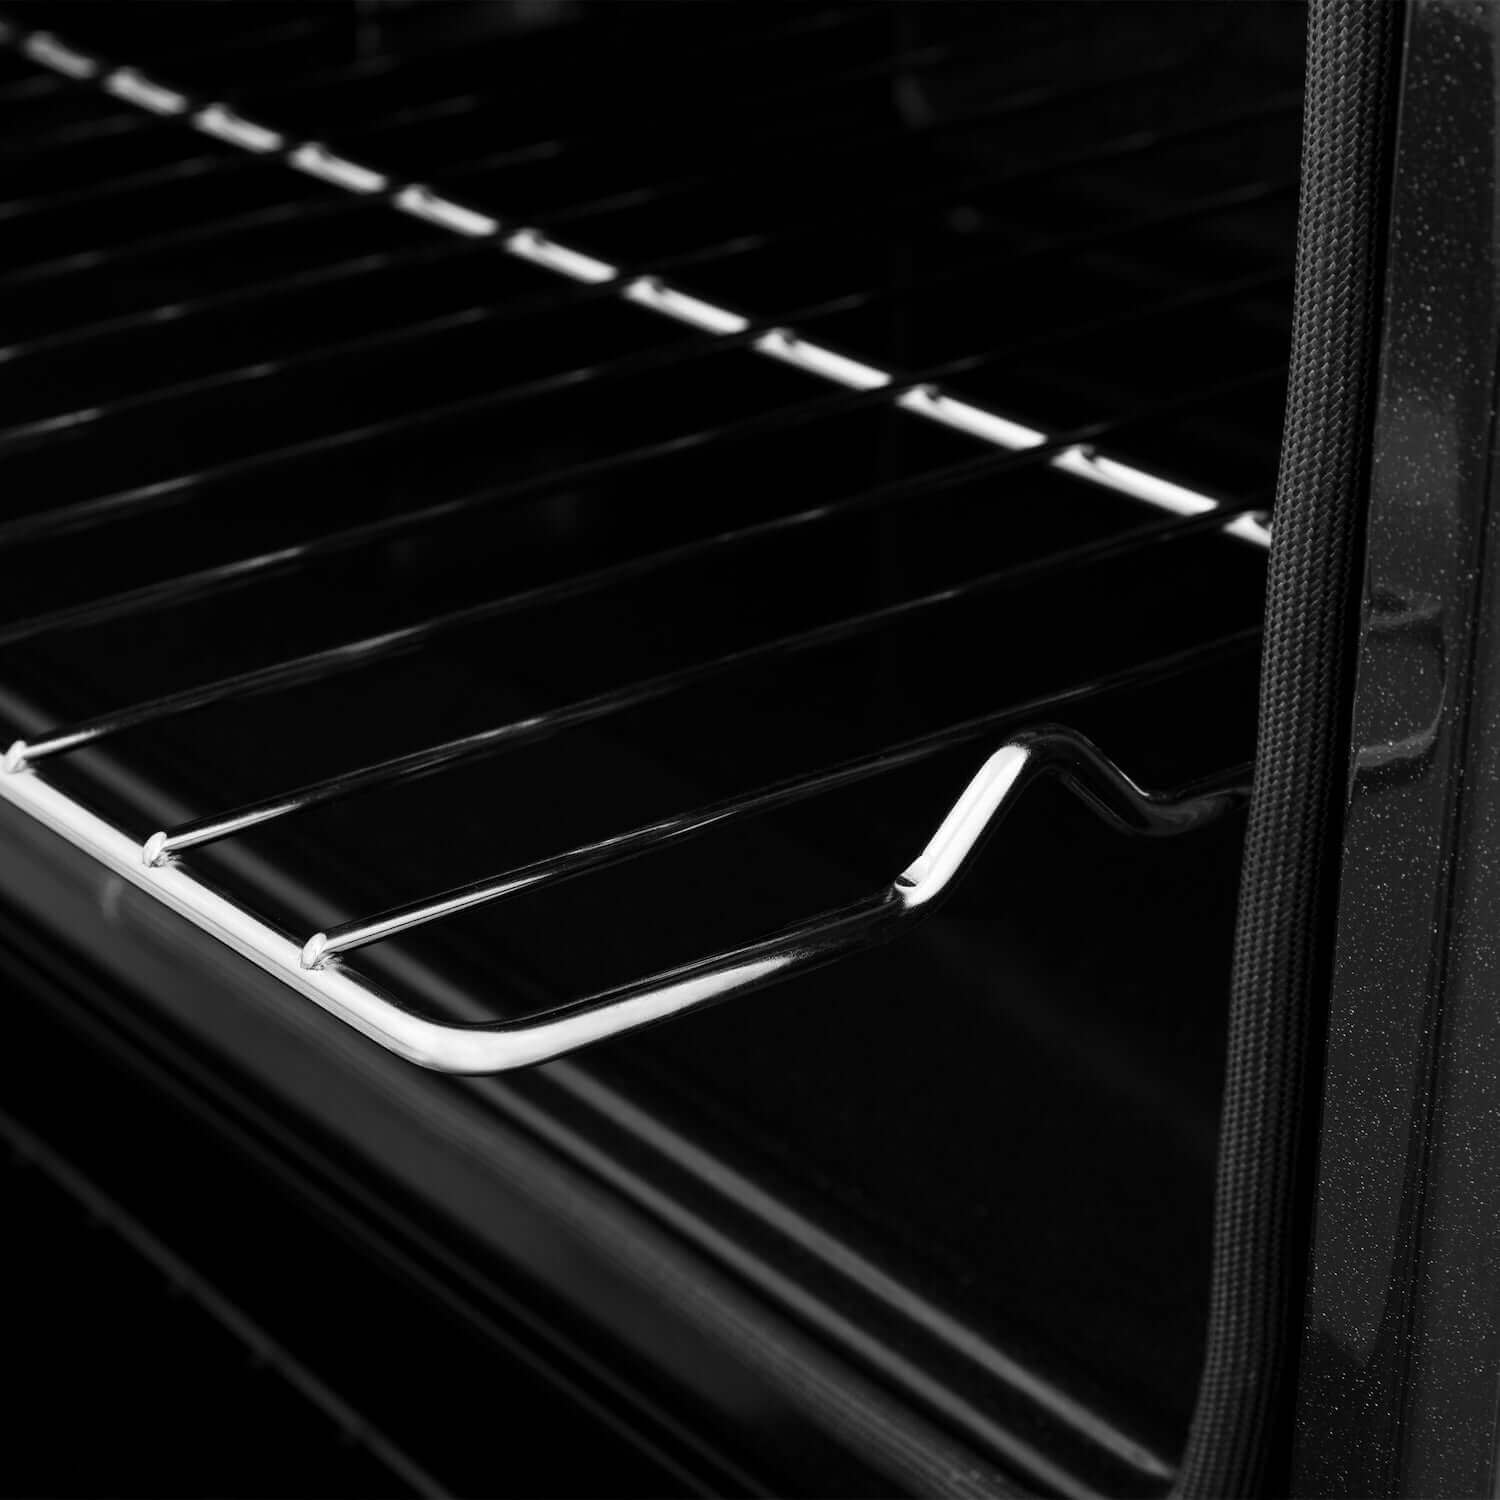 Adjustable oven rack inside ZLINE built-in wall oven.